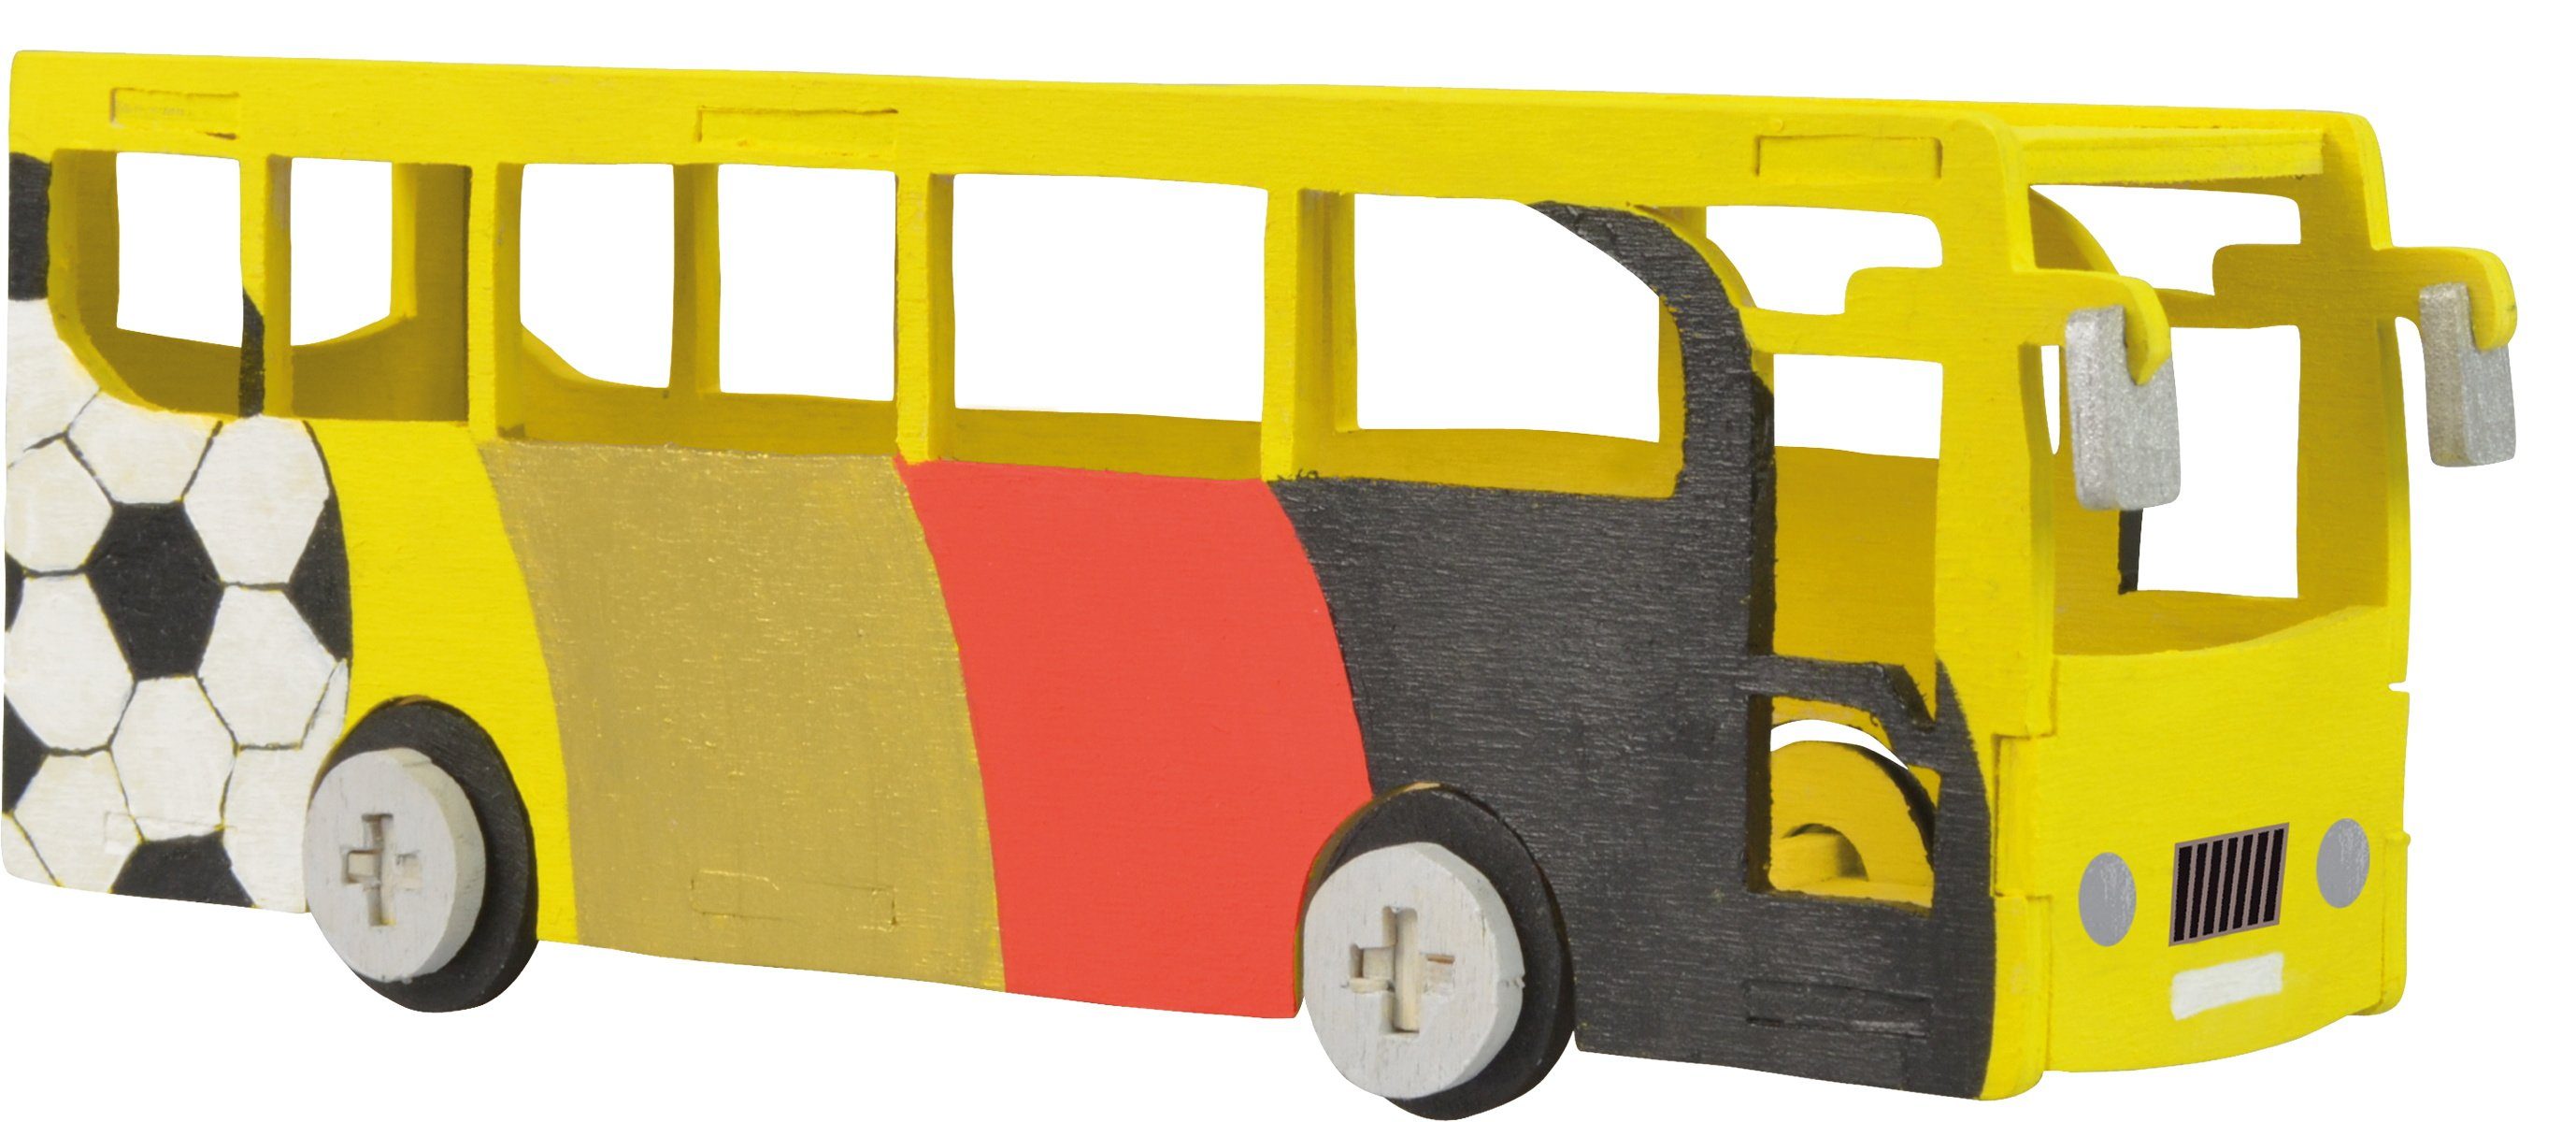 Pebaro 3D-Puzzle Holzbausatz Bus, 851/6, 20 Puzzleteile